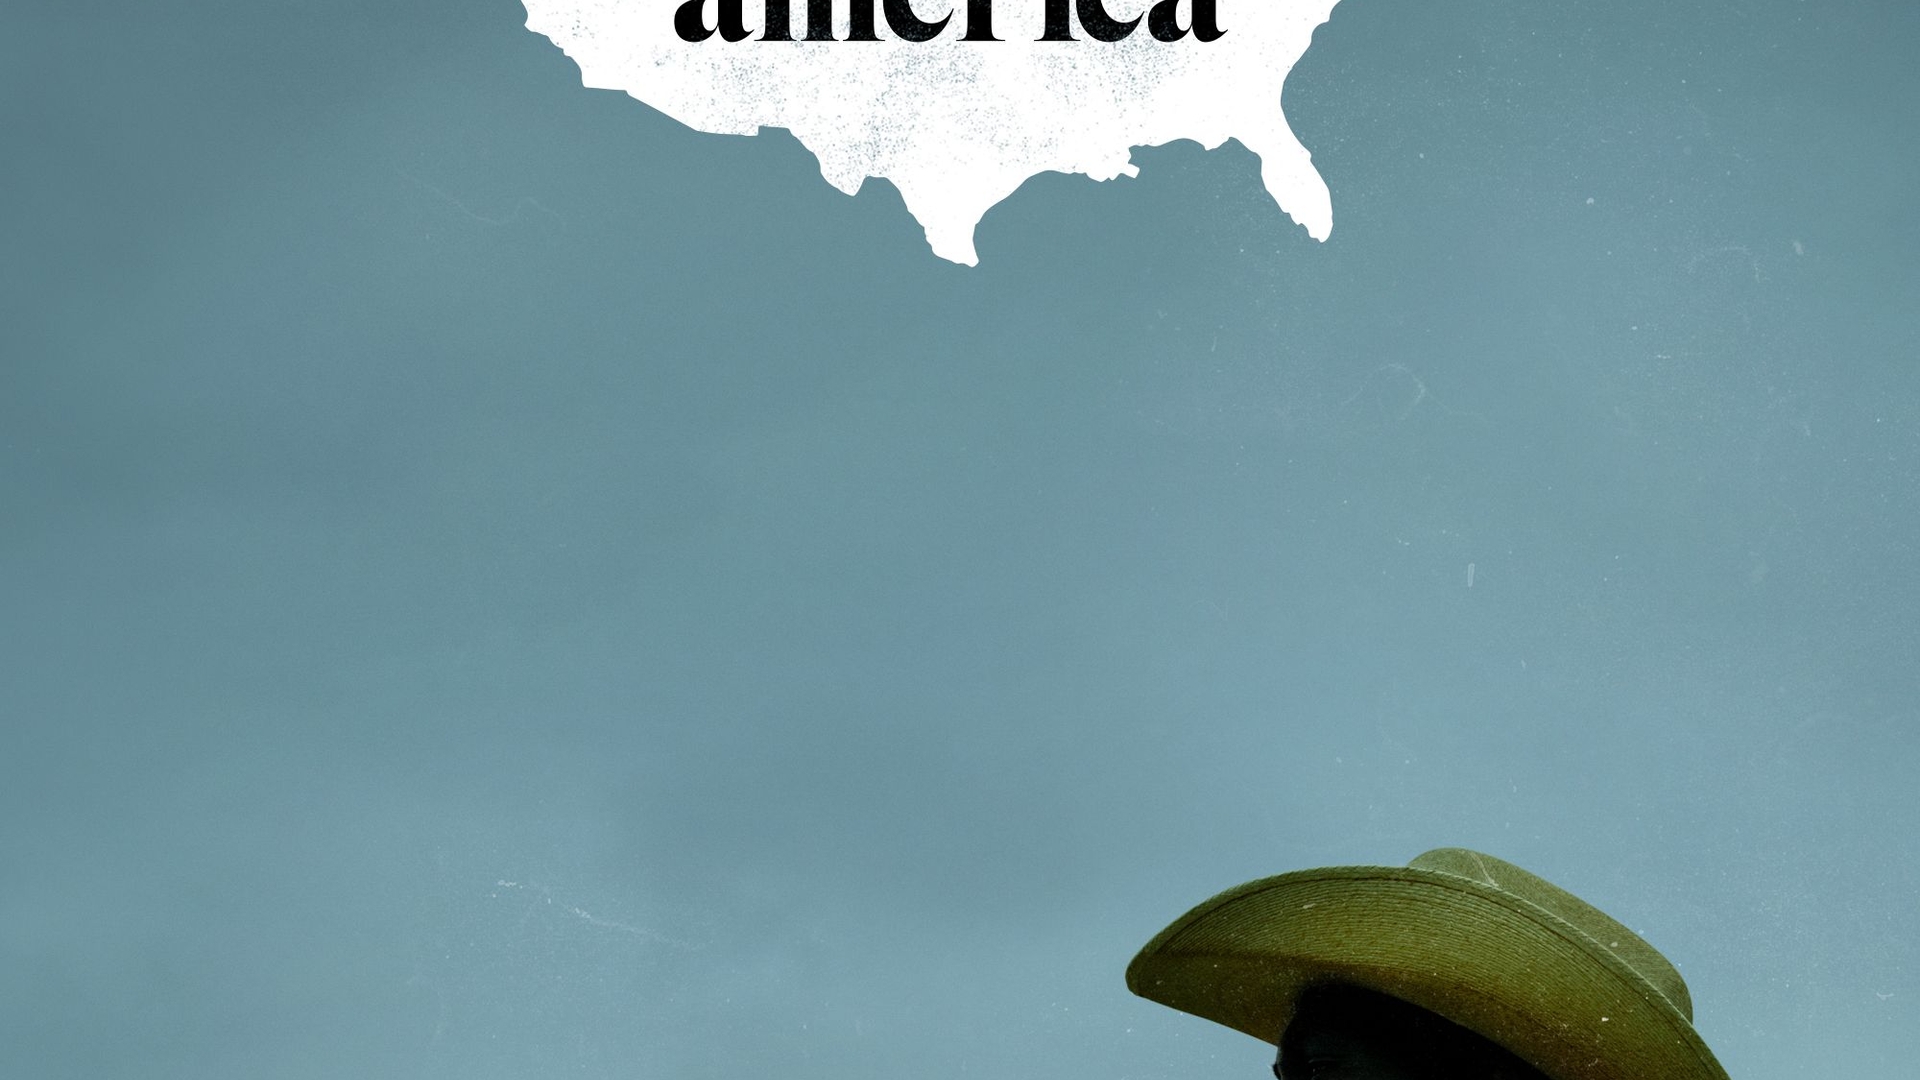 Little America S01